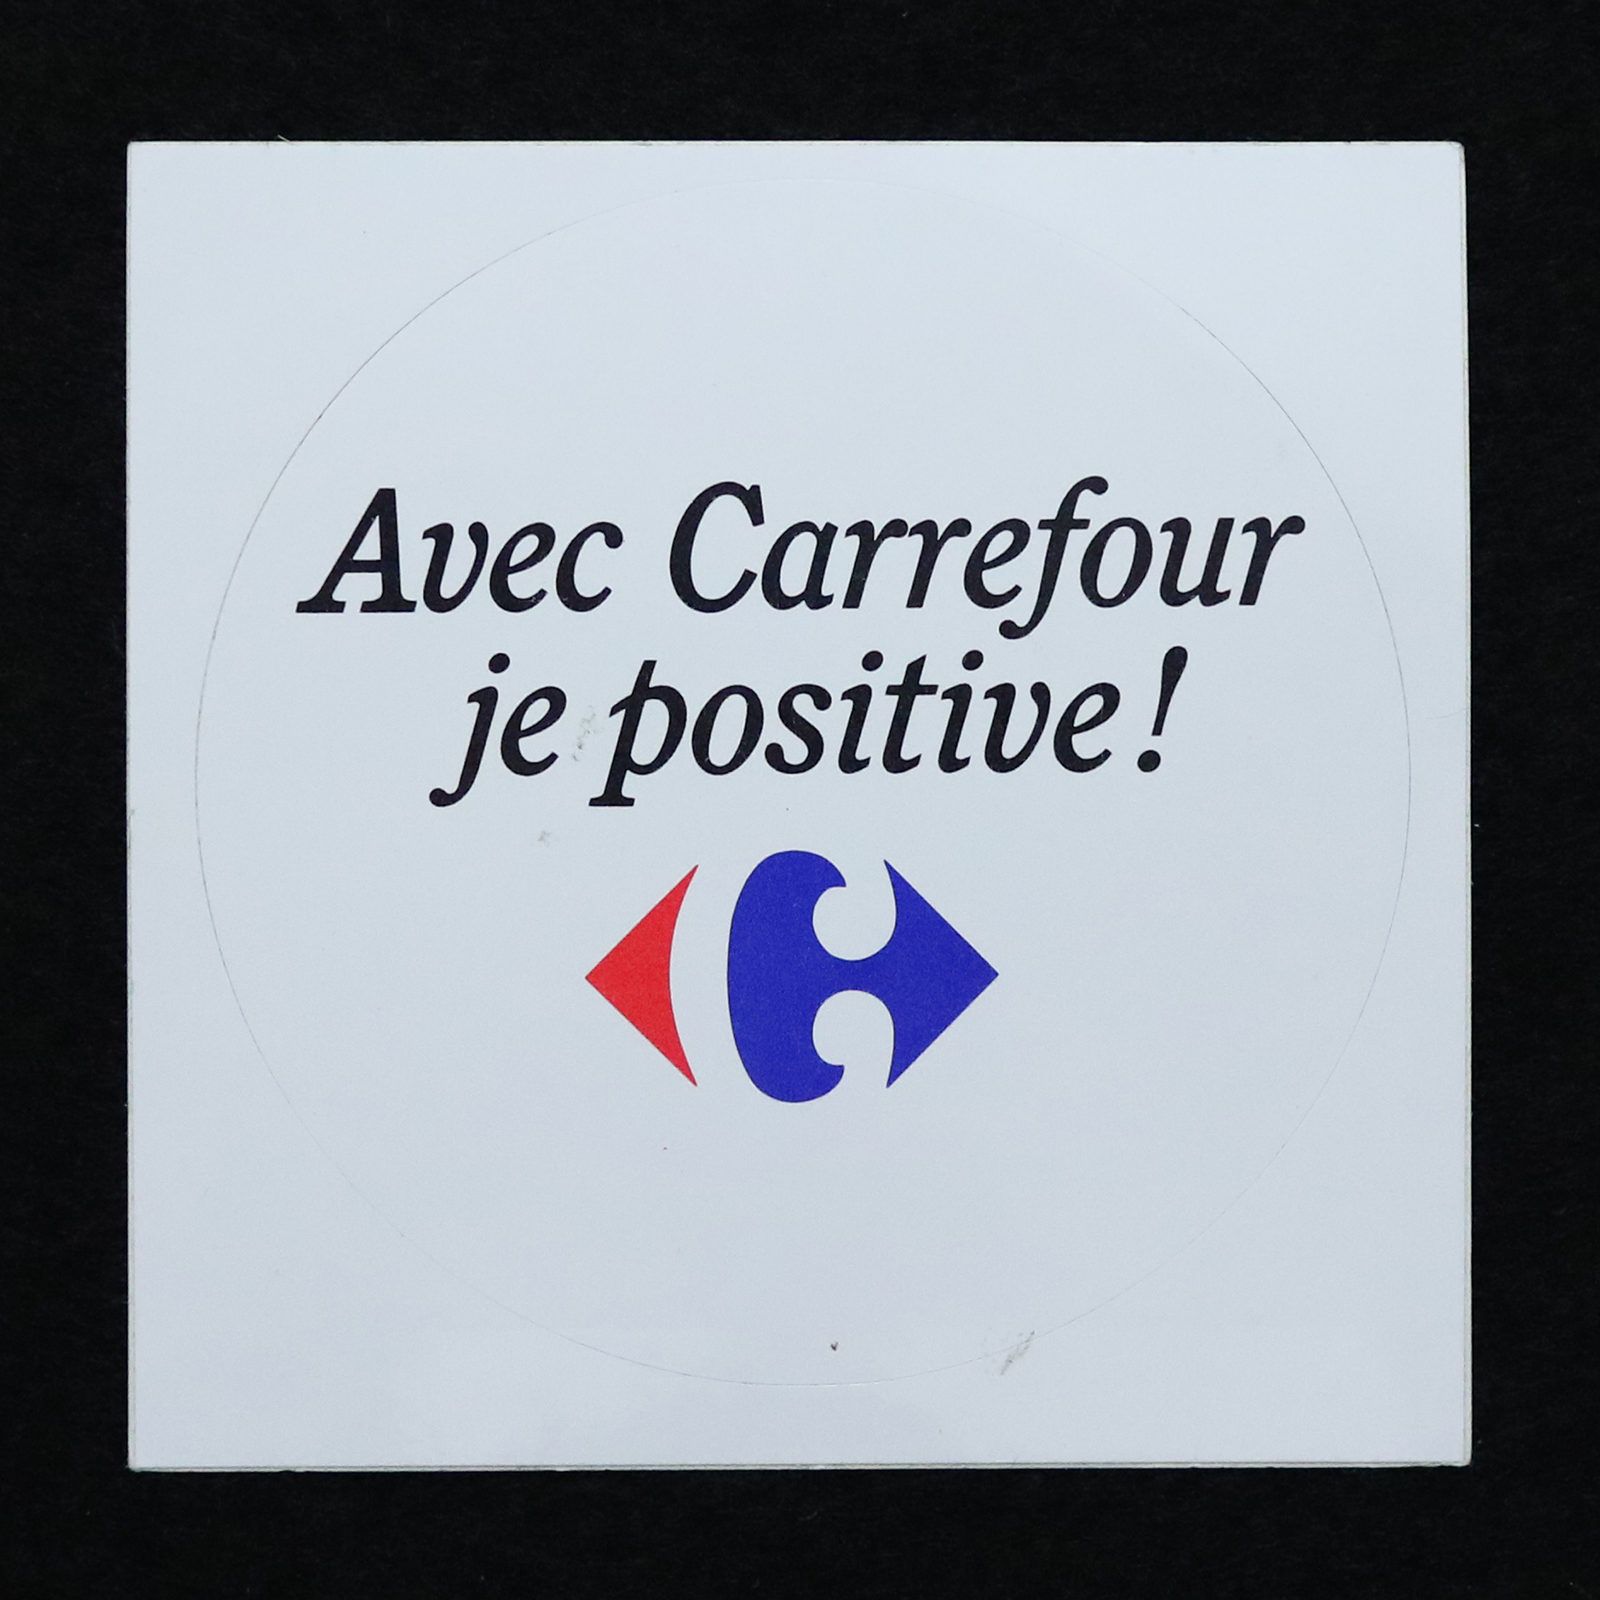 Avec Carrefour je positive! カルフール ヴィンテージステッカー